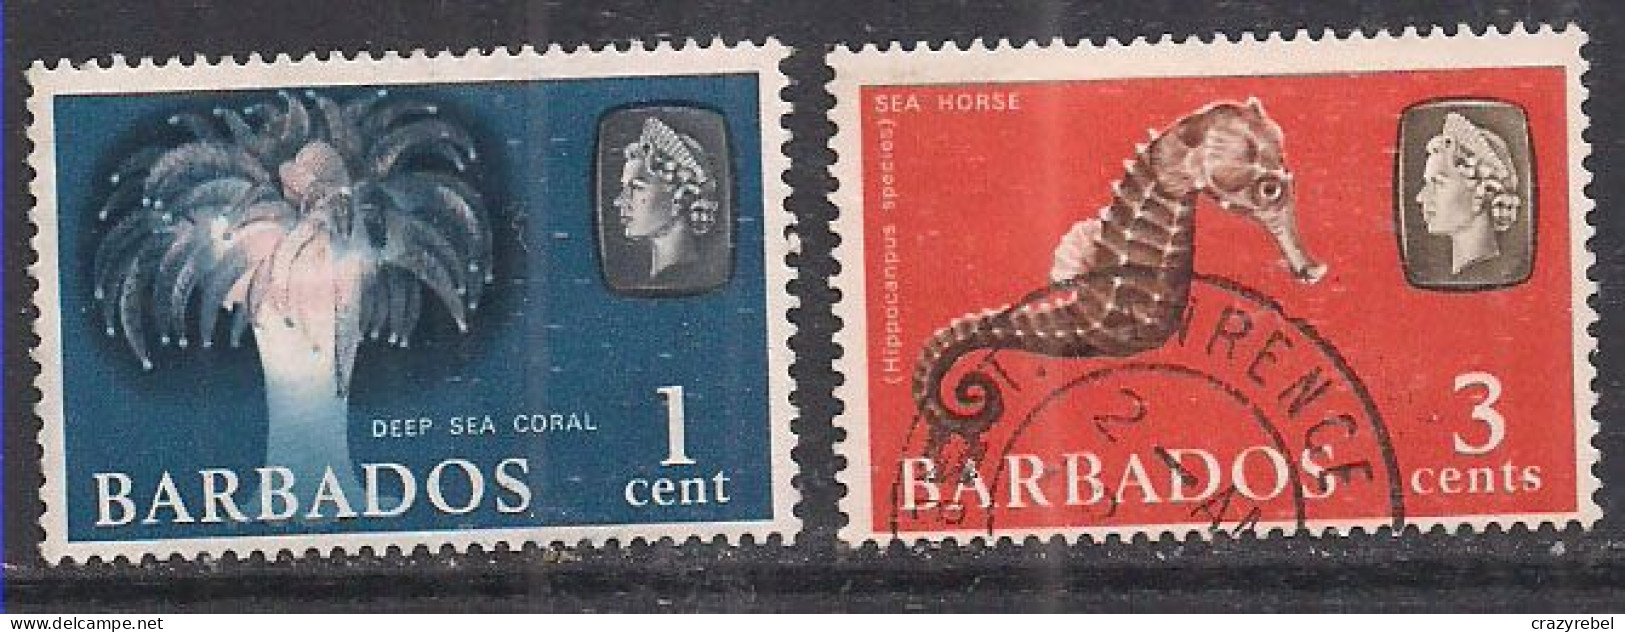 Barbados 1965 QE2 Pr 1+3cents CoralSG 322/24 MH+used ( J1071 ) - Bahrain (...-1965)